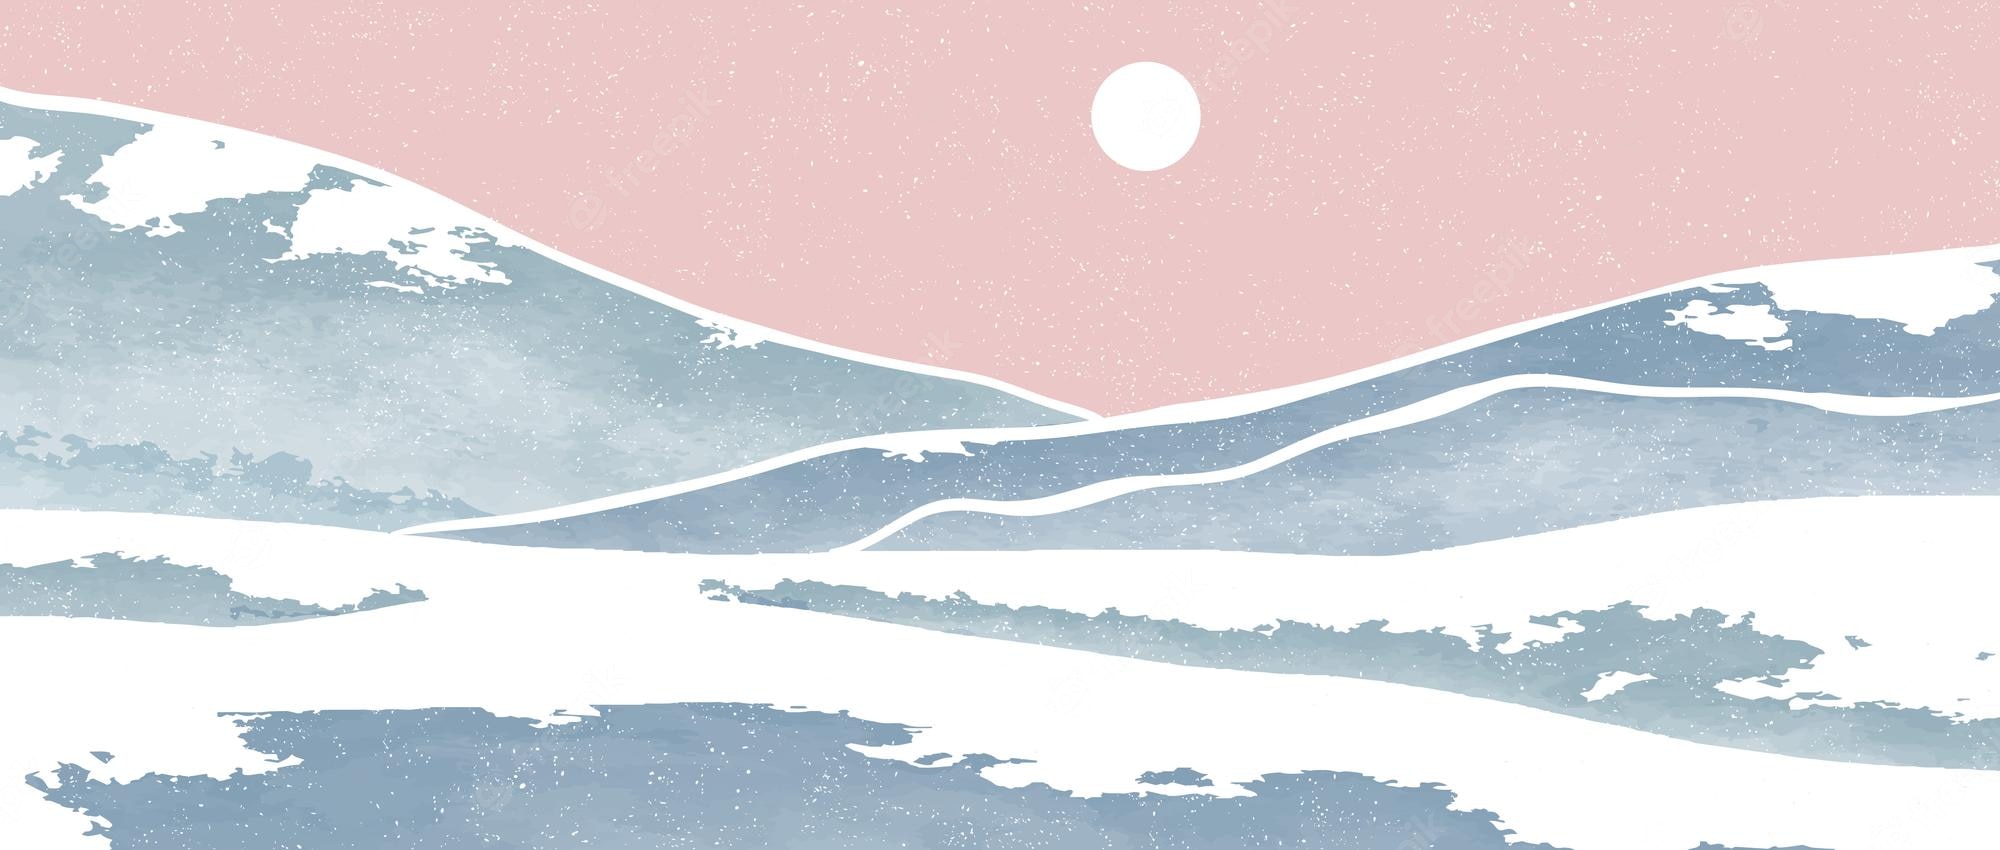 Aesthetic winter wallpaper Vectors & Illustrations for Free Download